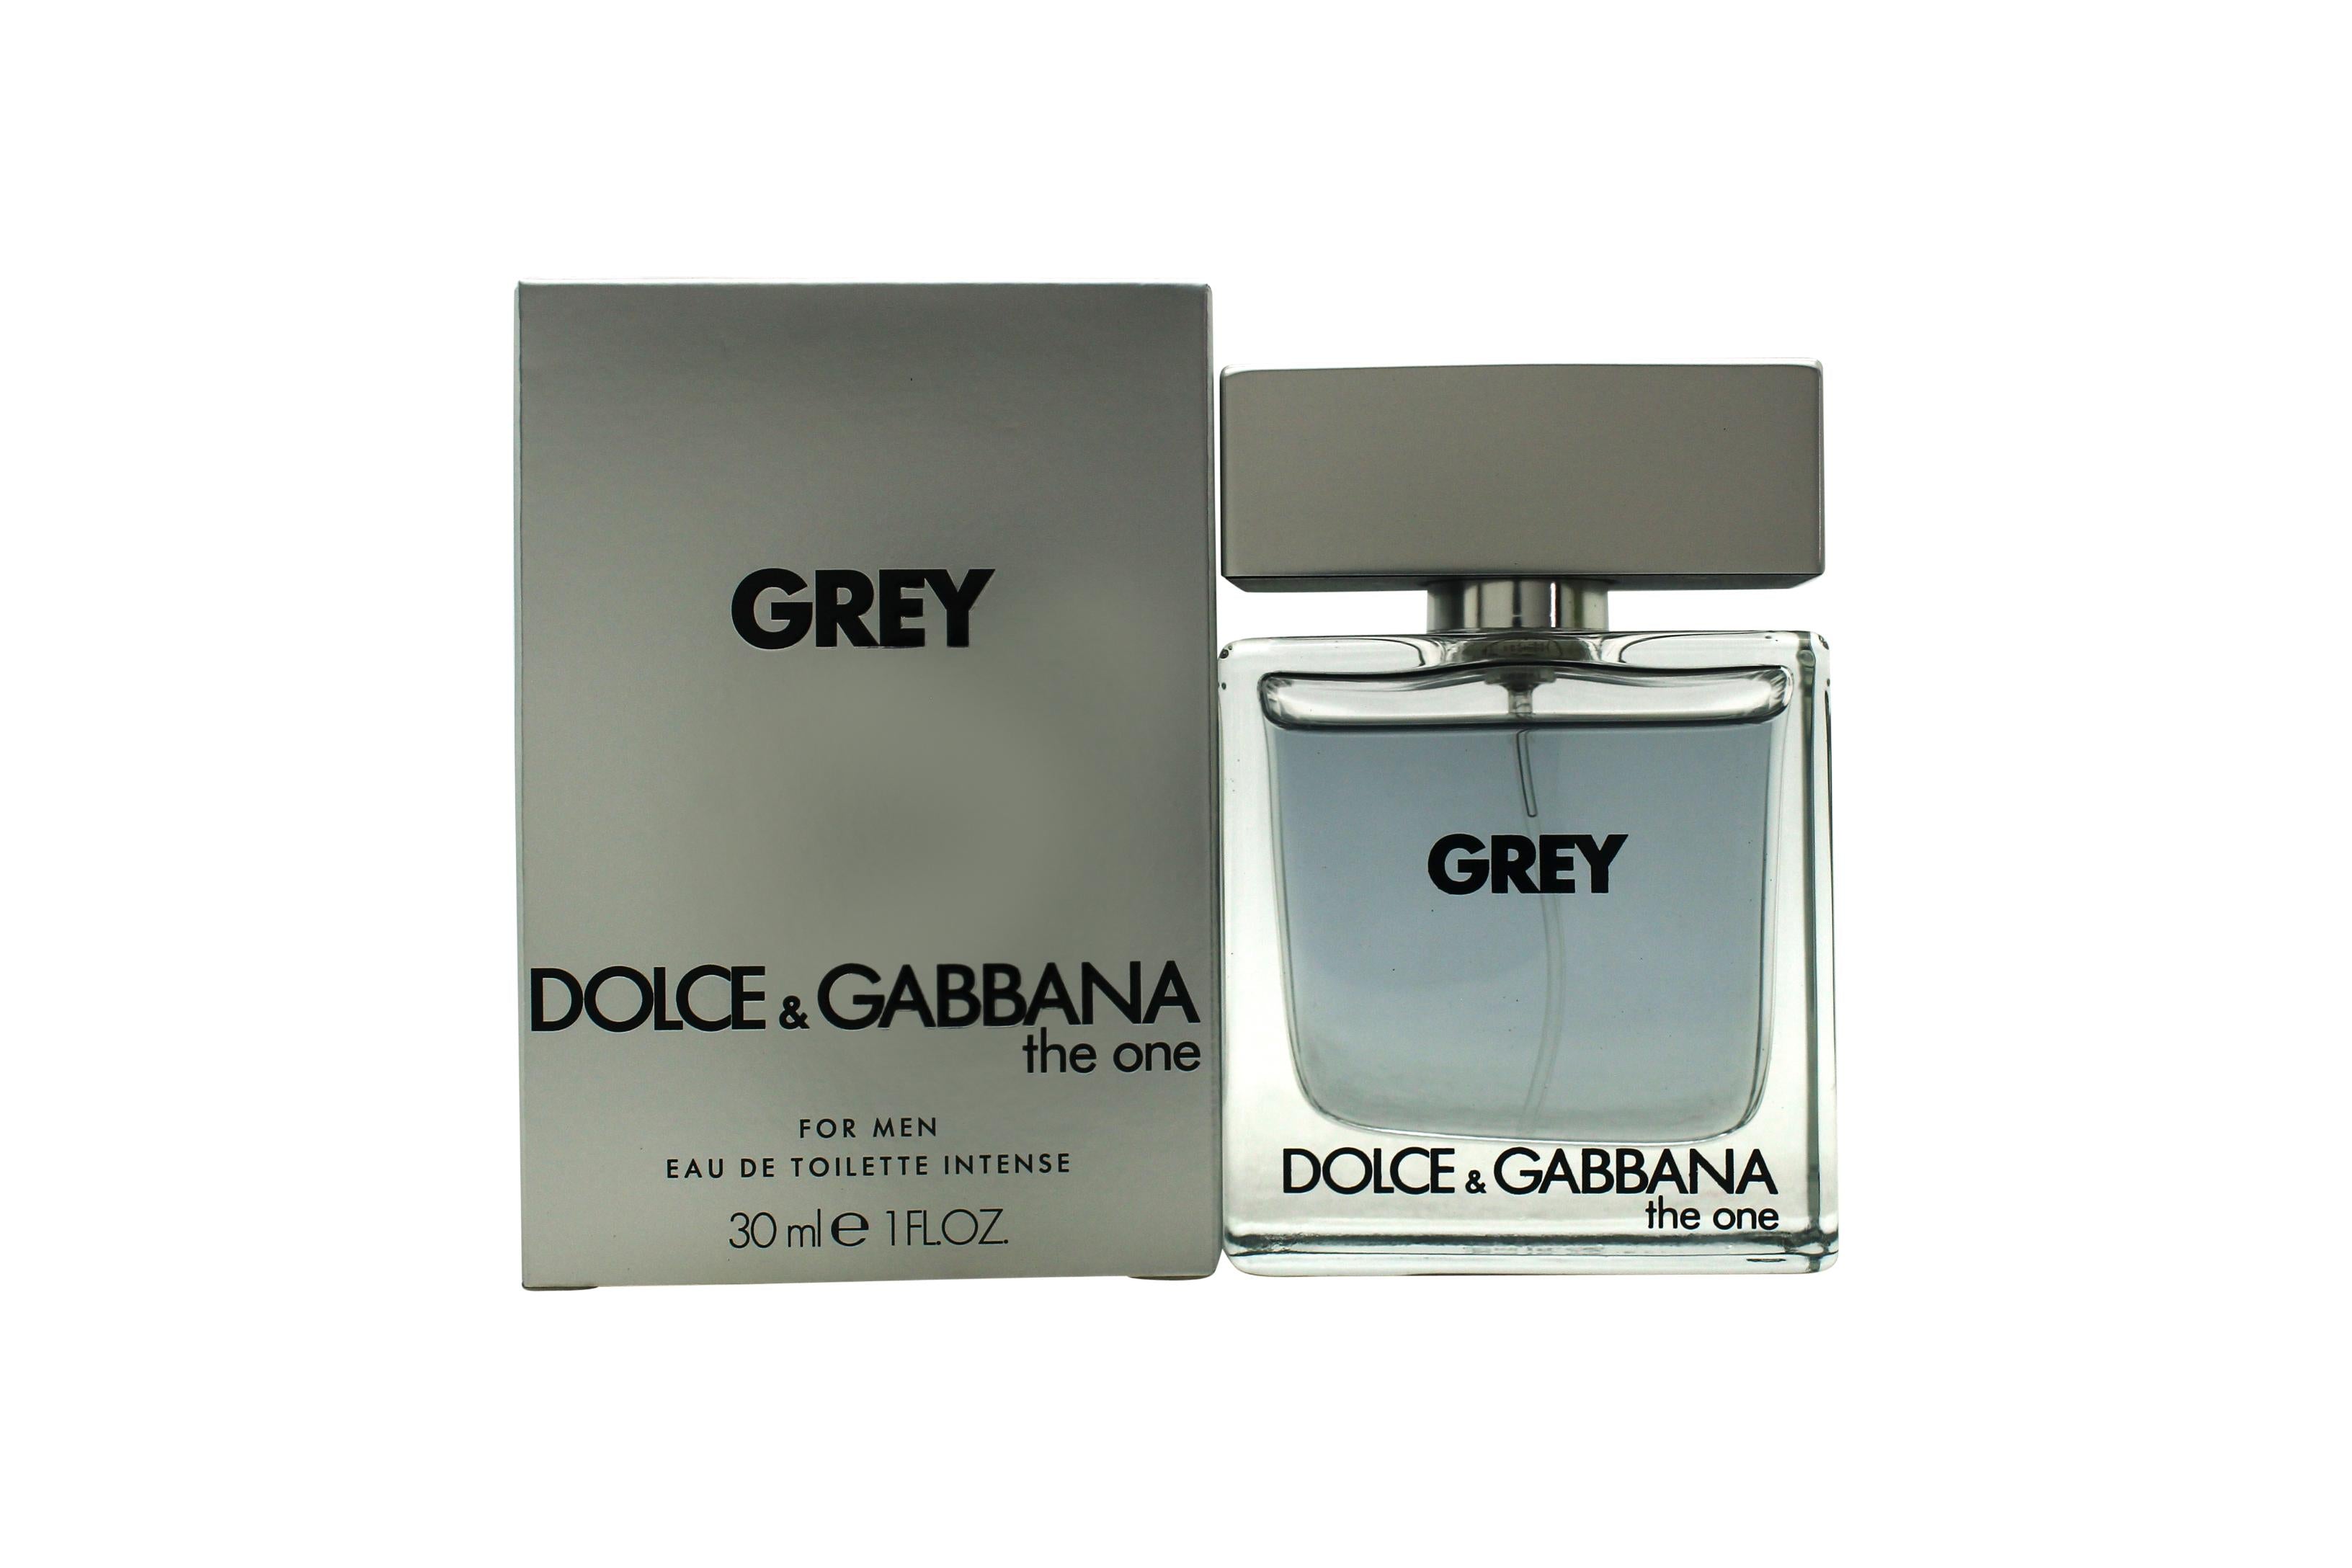 View Dolce Gabbana The One Grey Eau de Toilette 30ml Spray information